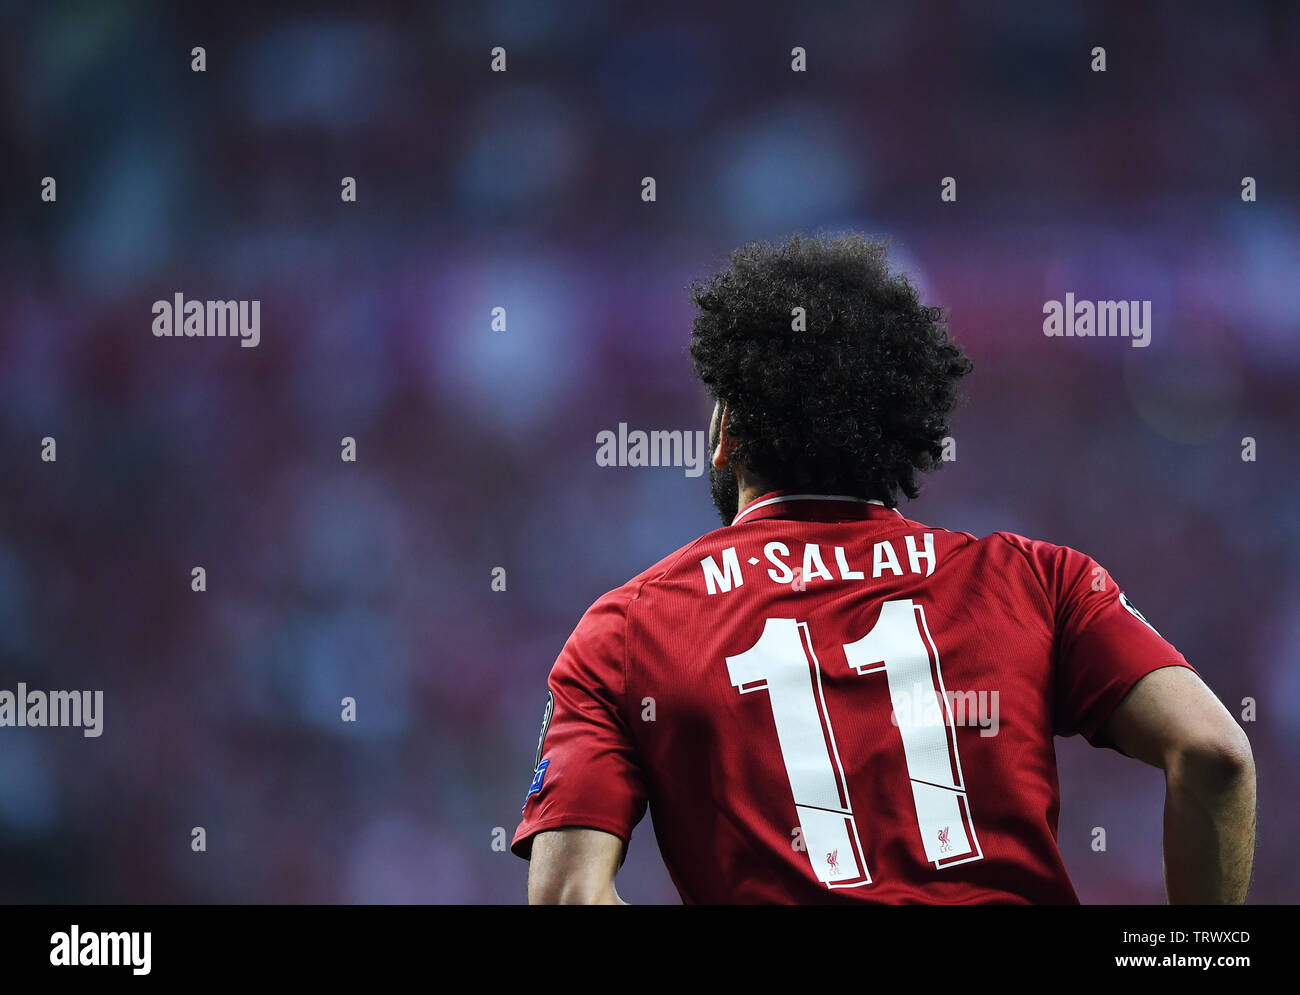 MADRID, Spagna - 1 giugno 2019: Mohamed Salah di Liverpool nella foto durante il 2018/19 finale di UEFA Champions League tra Tottenham Hotspur (Inghilterra) e Liverpool FC (Inghilterra) a Wanda Metropolitano. Foto Stock